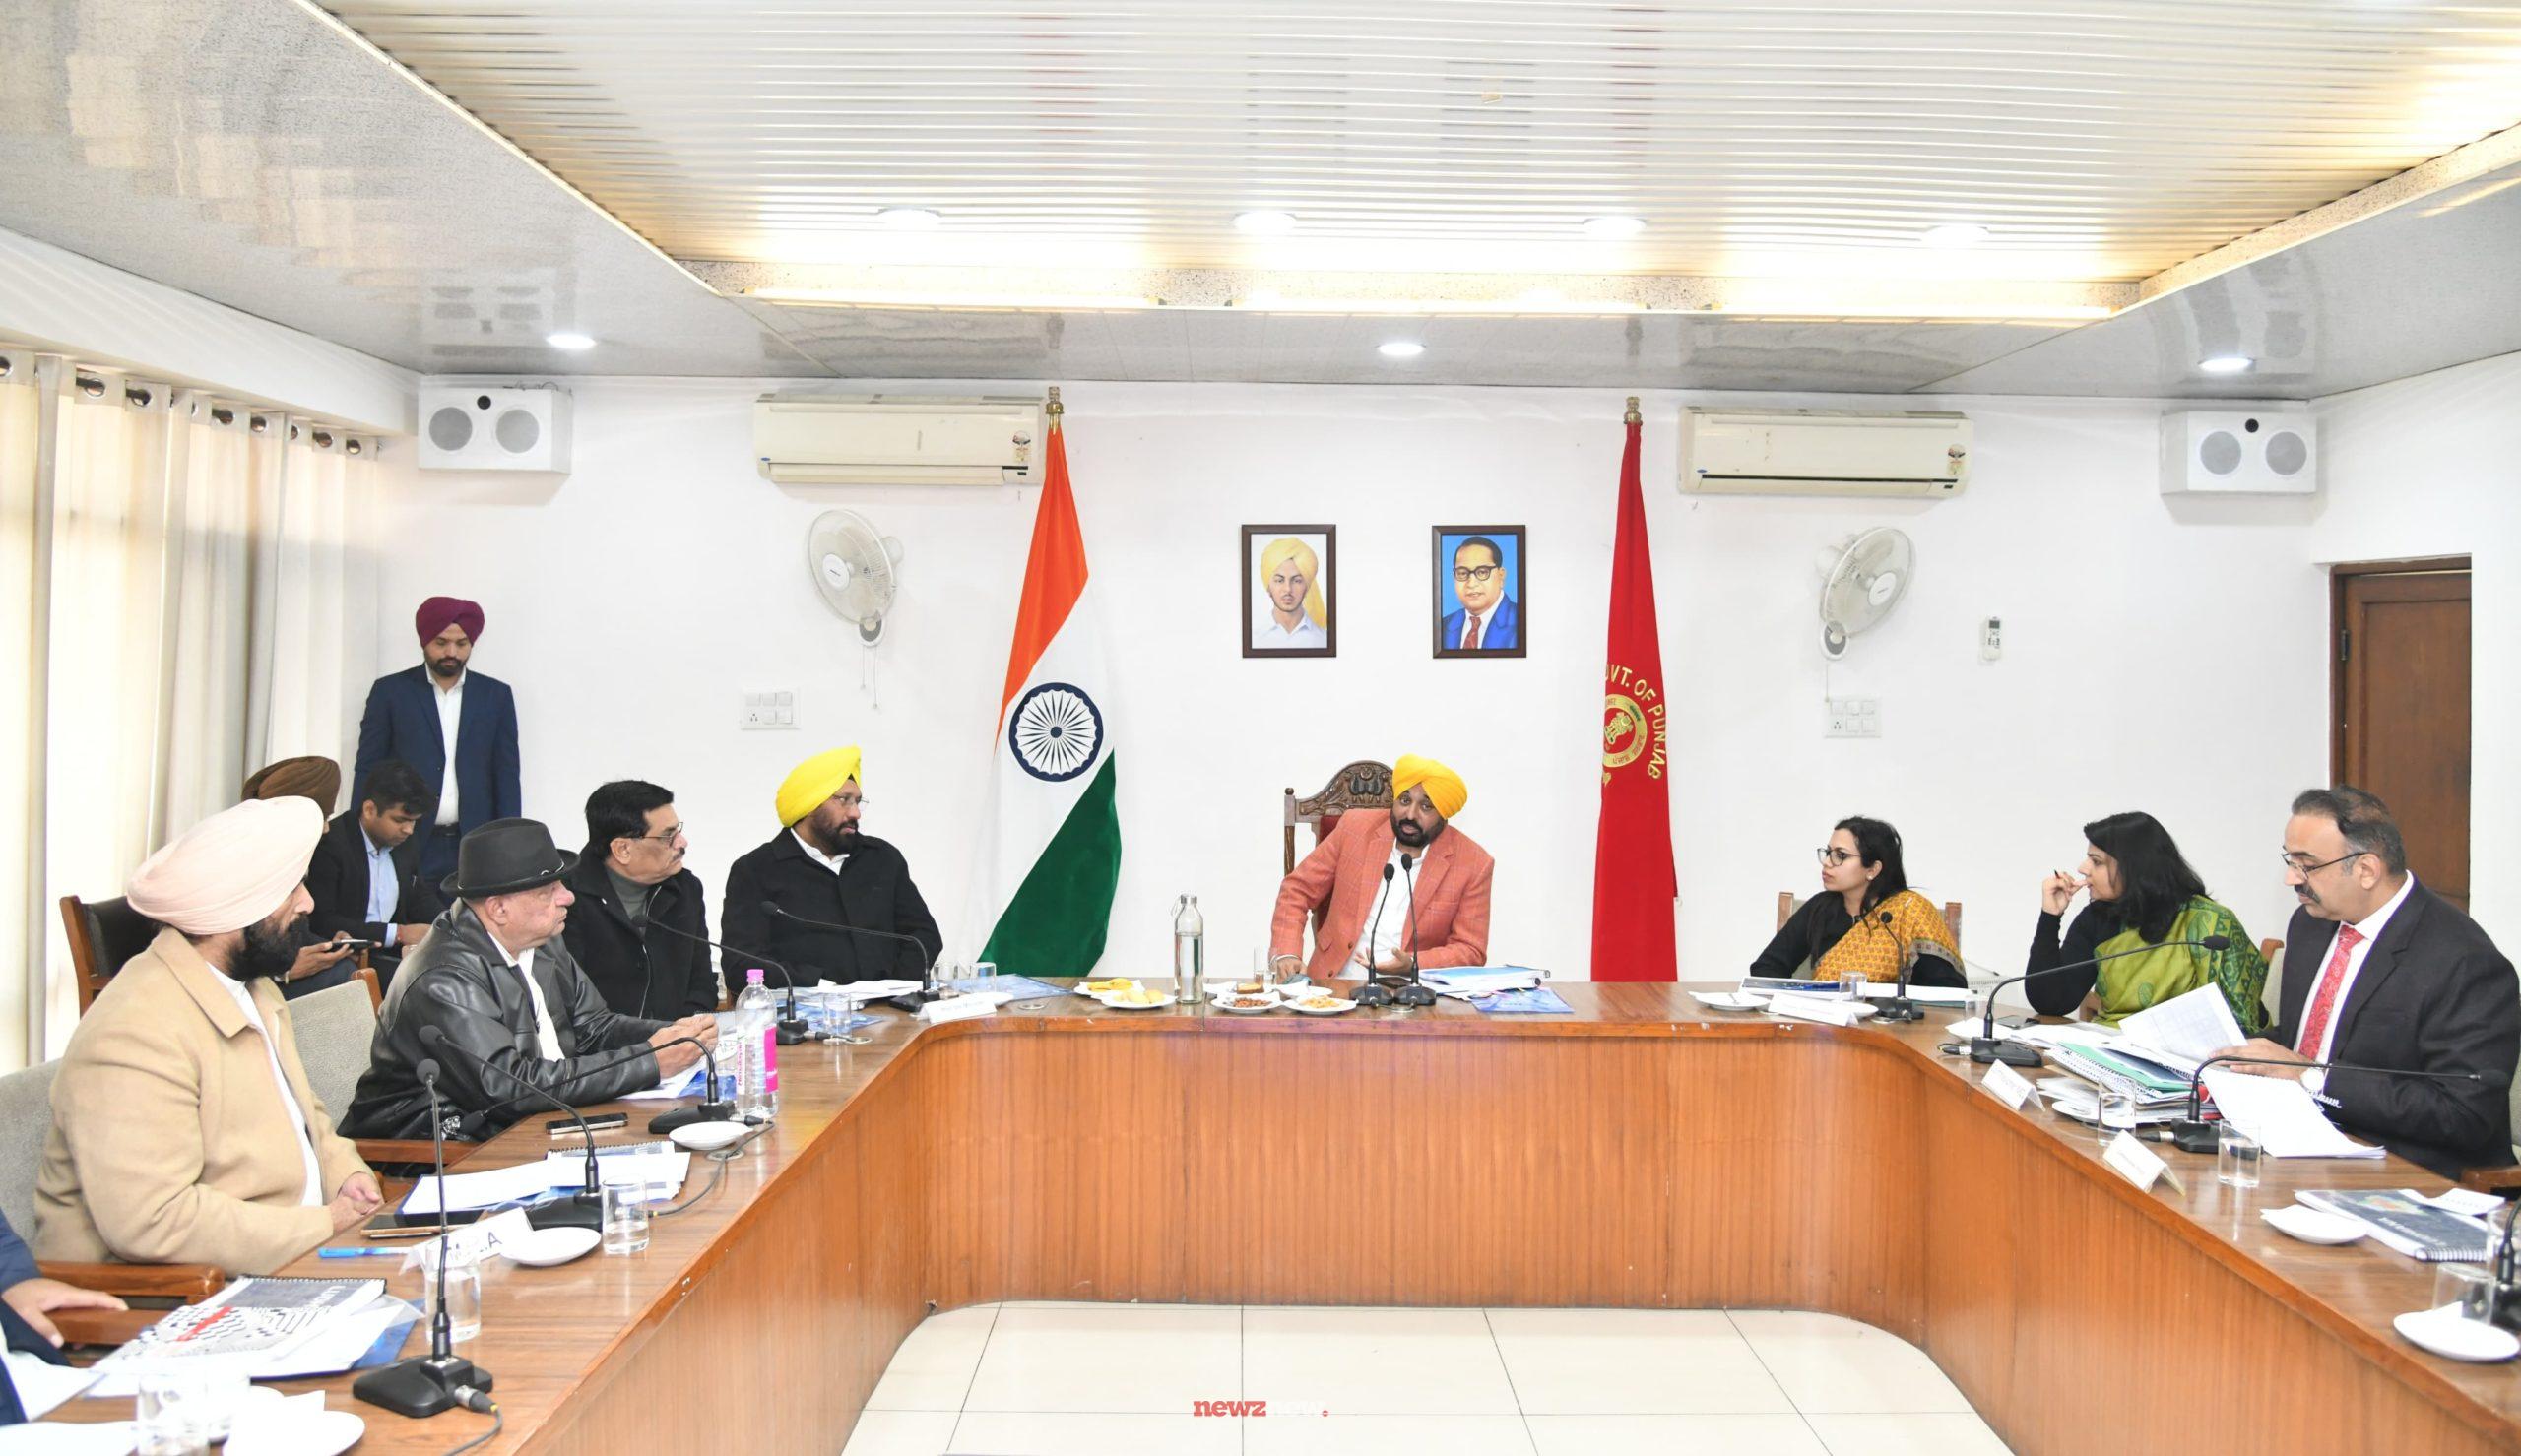 CM announces major developmental push to industrial city Ludhiana